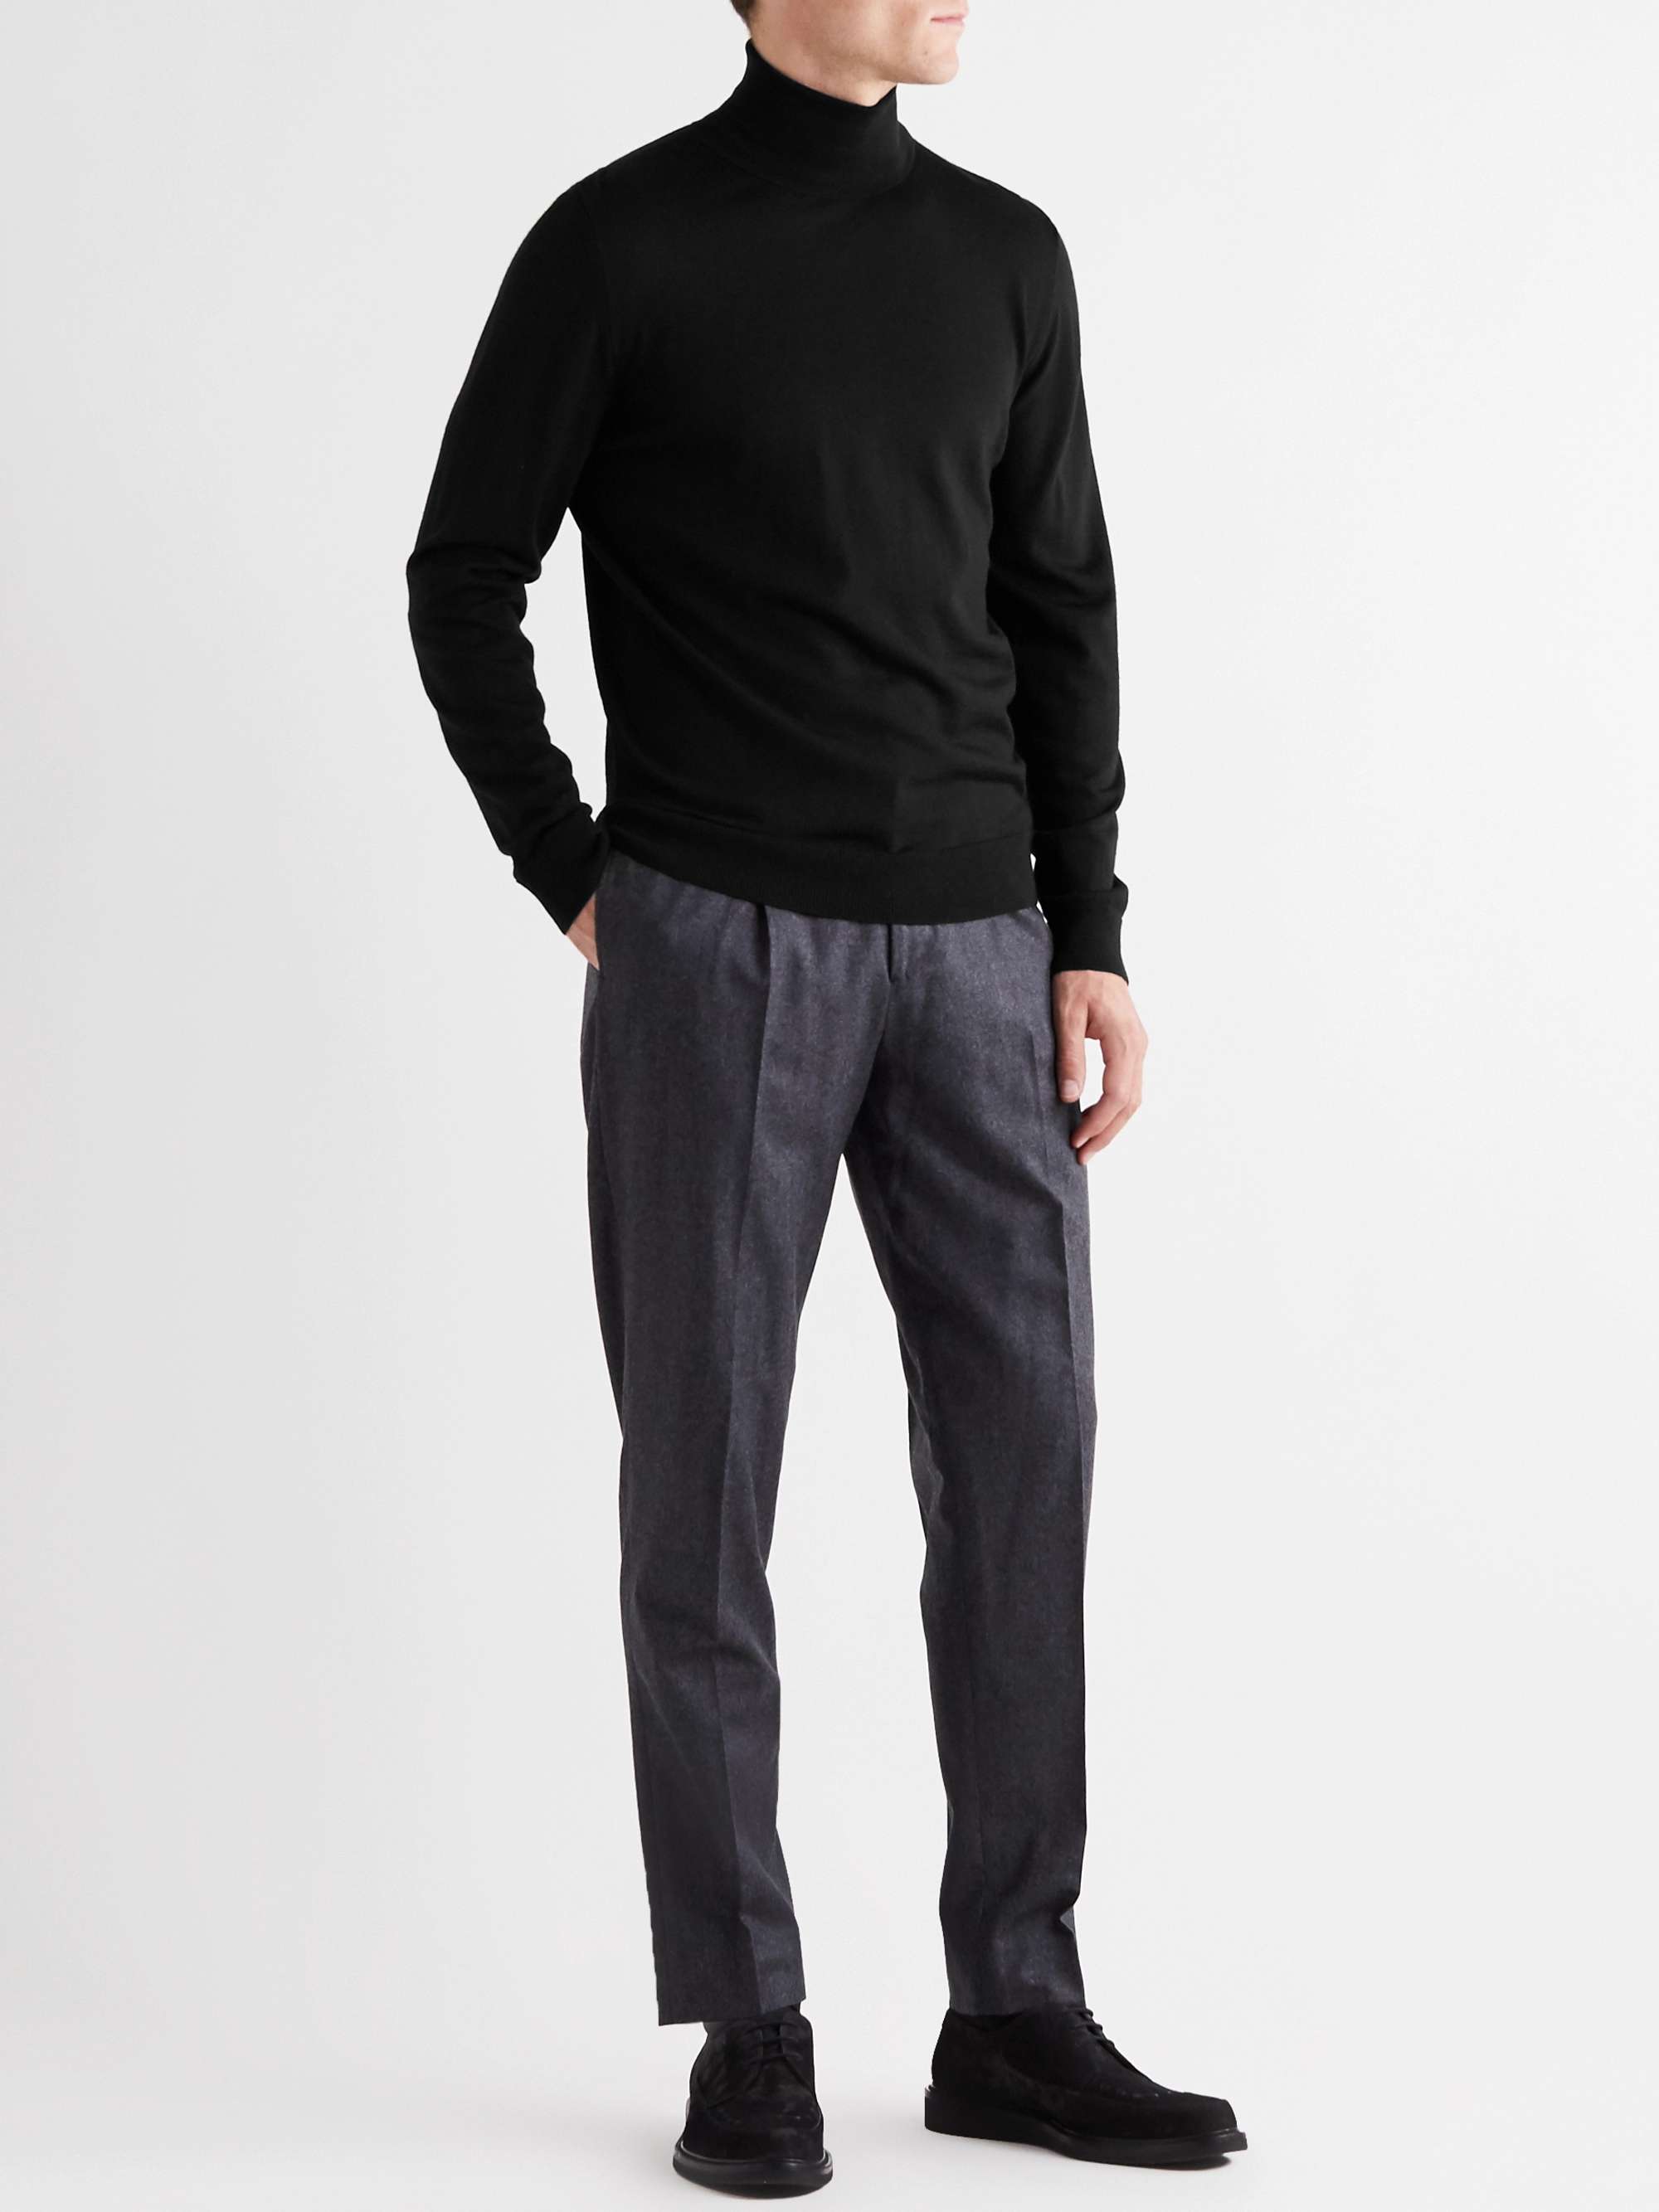 MR P. Slim-Fit Merino Wool Rollneck Sweater | MR PORTER